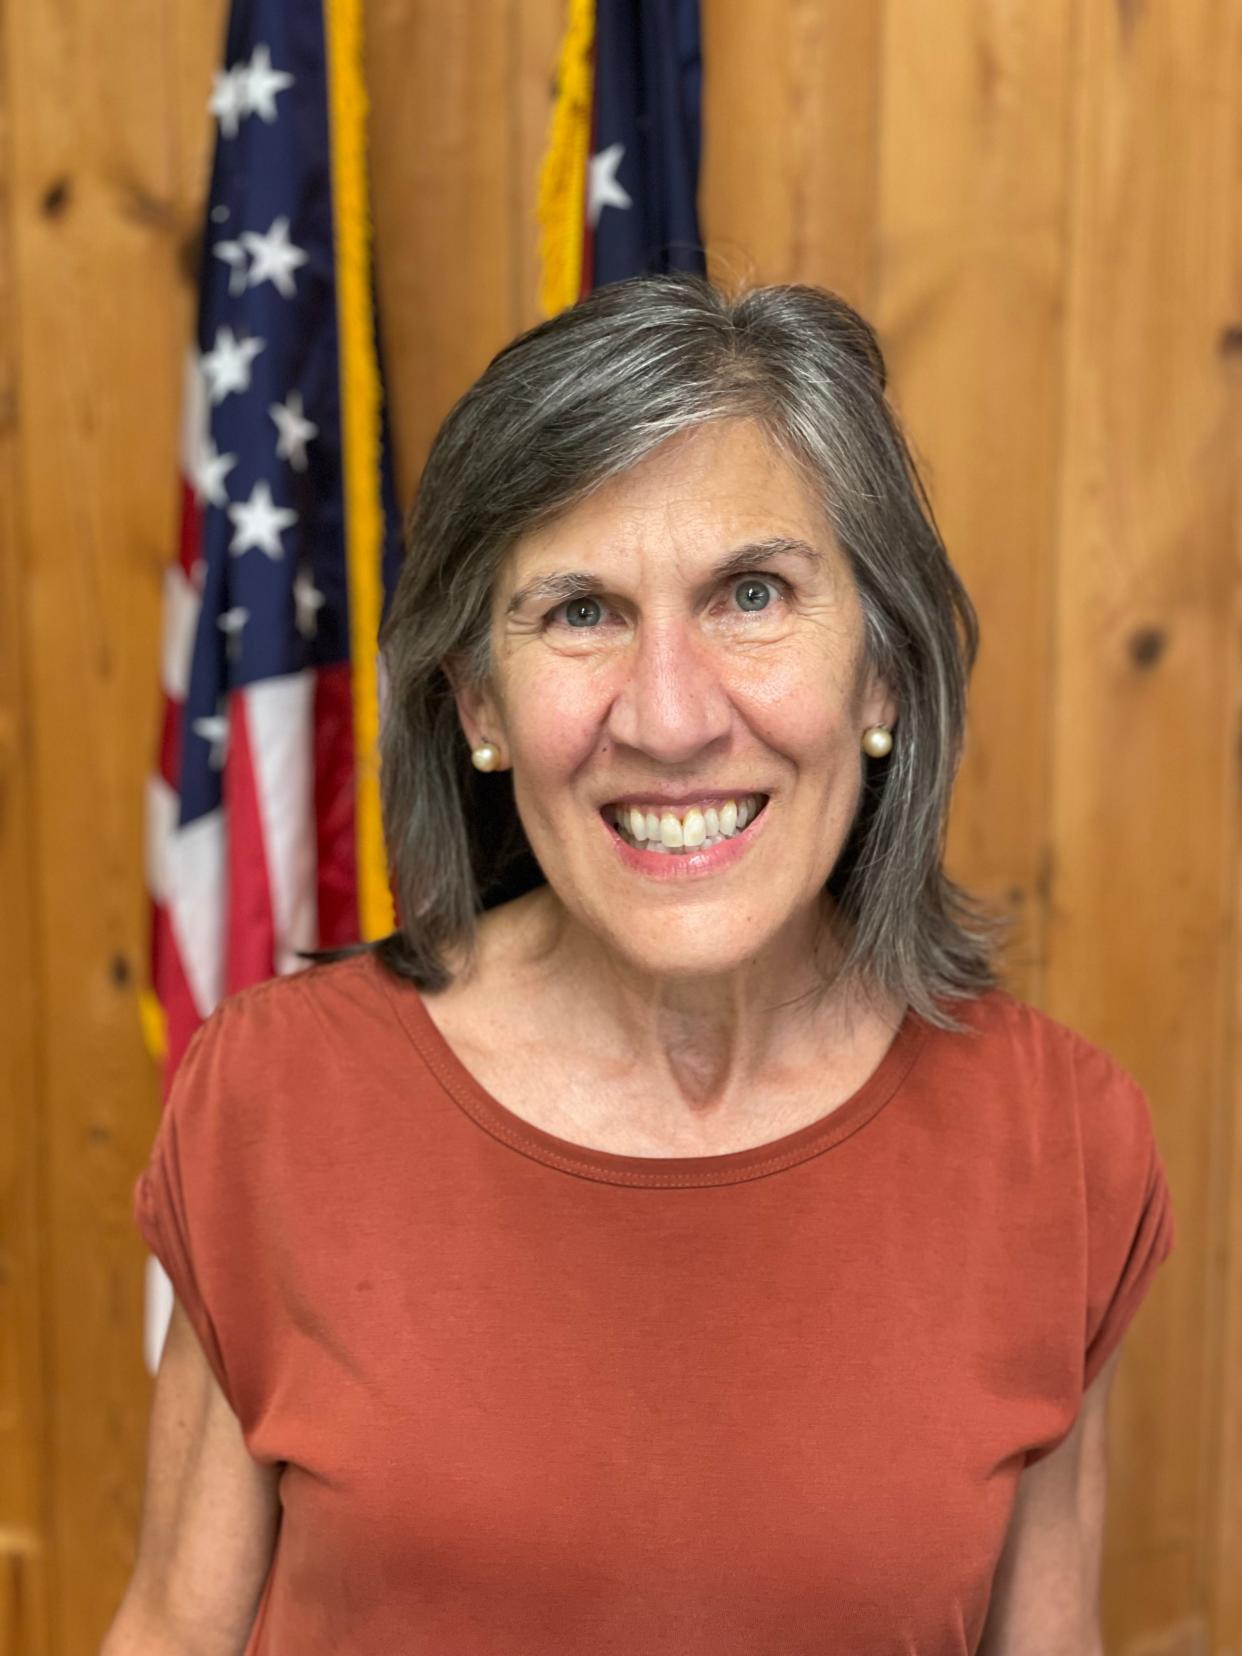 New Concord Mayor Jennifer Lyle